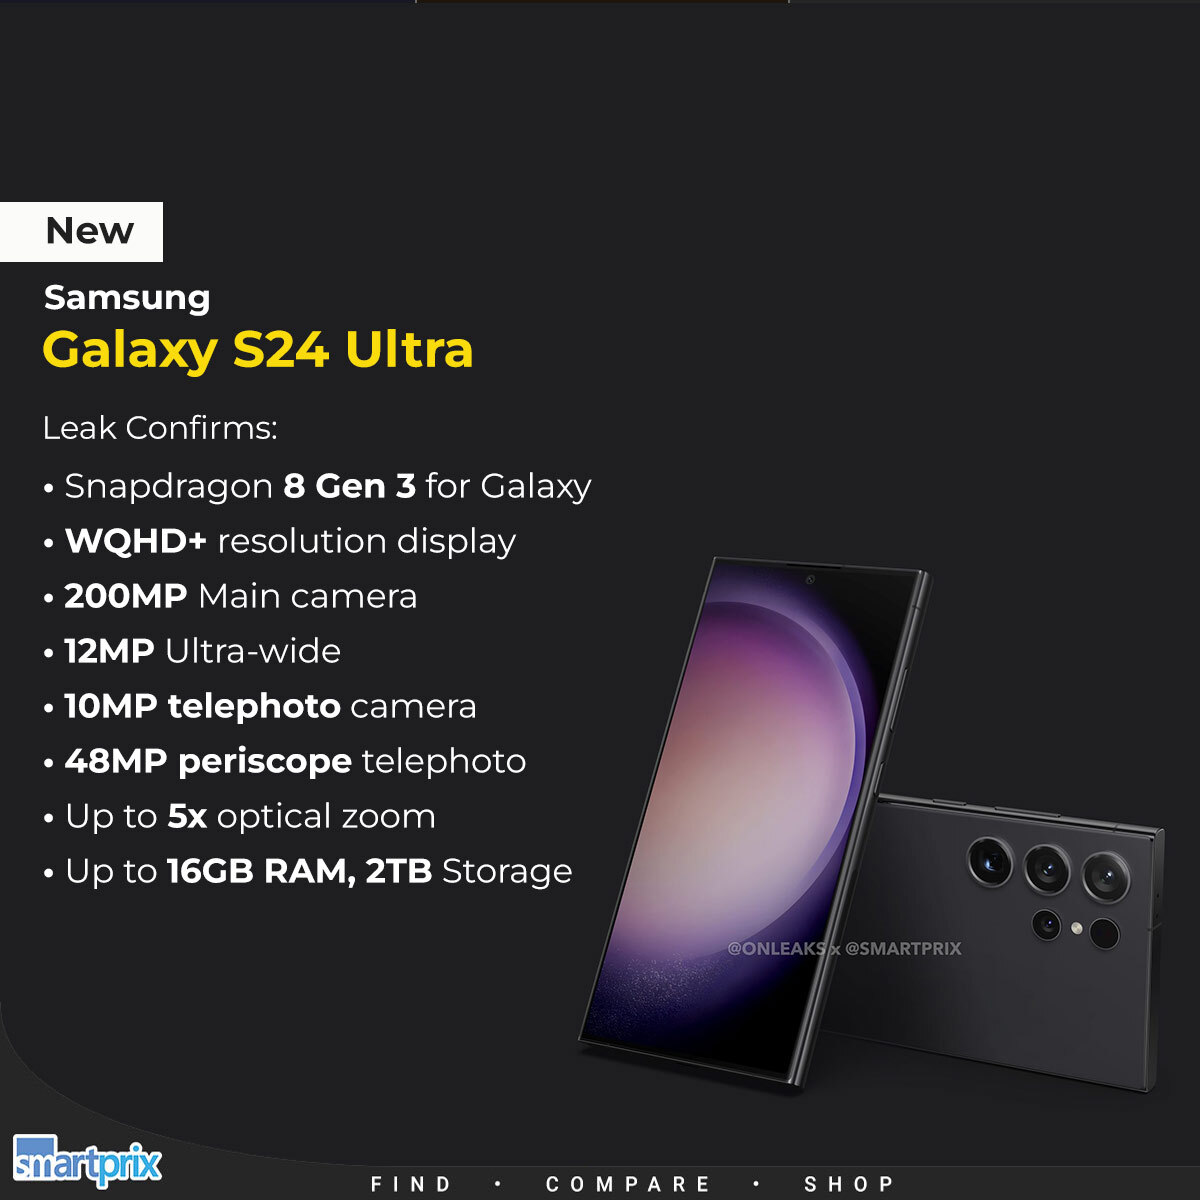 Samsung Galaxy 24 Ultra could get 5x telephoto zoom - Smartprix